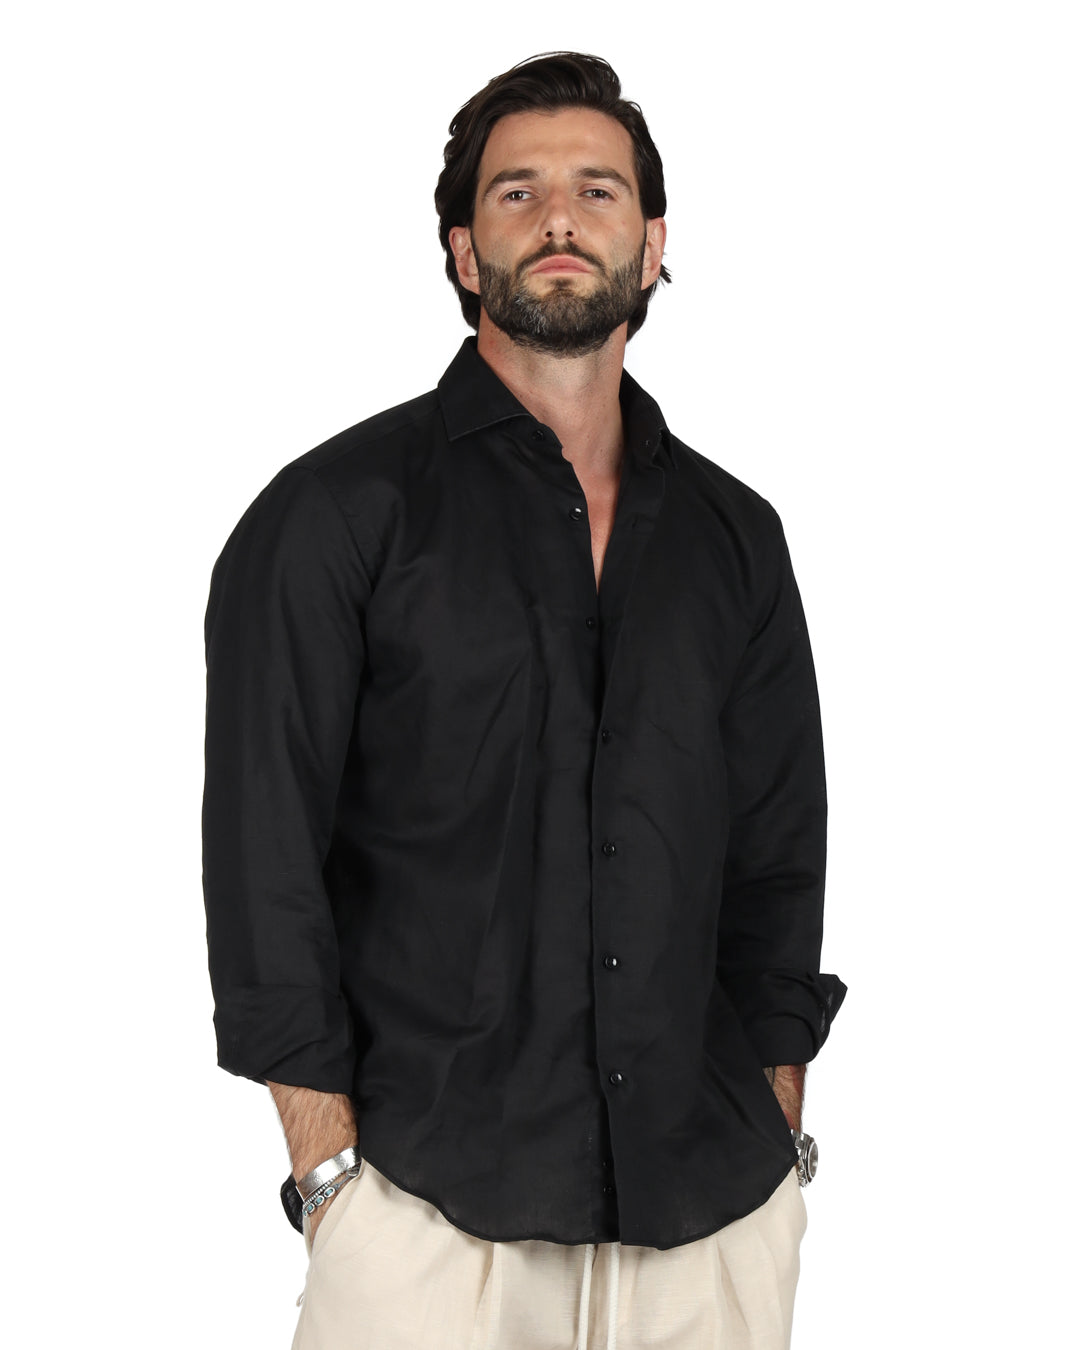 Praiano - Classic black linen shirt